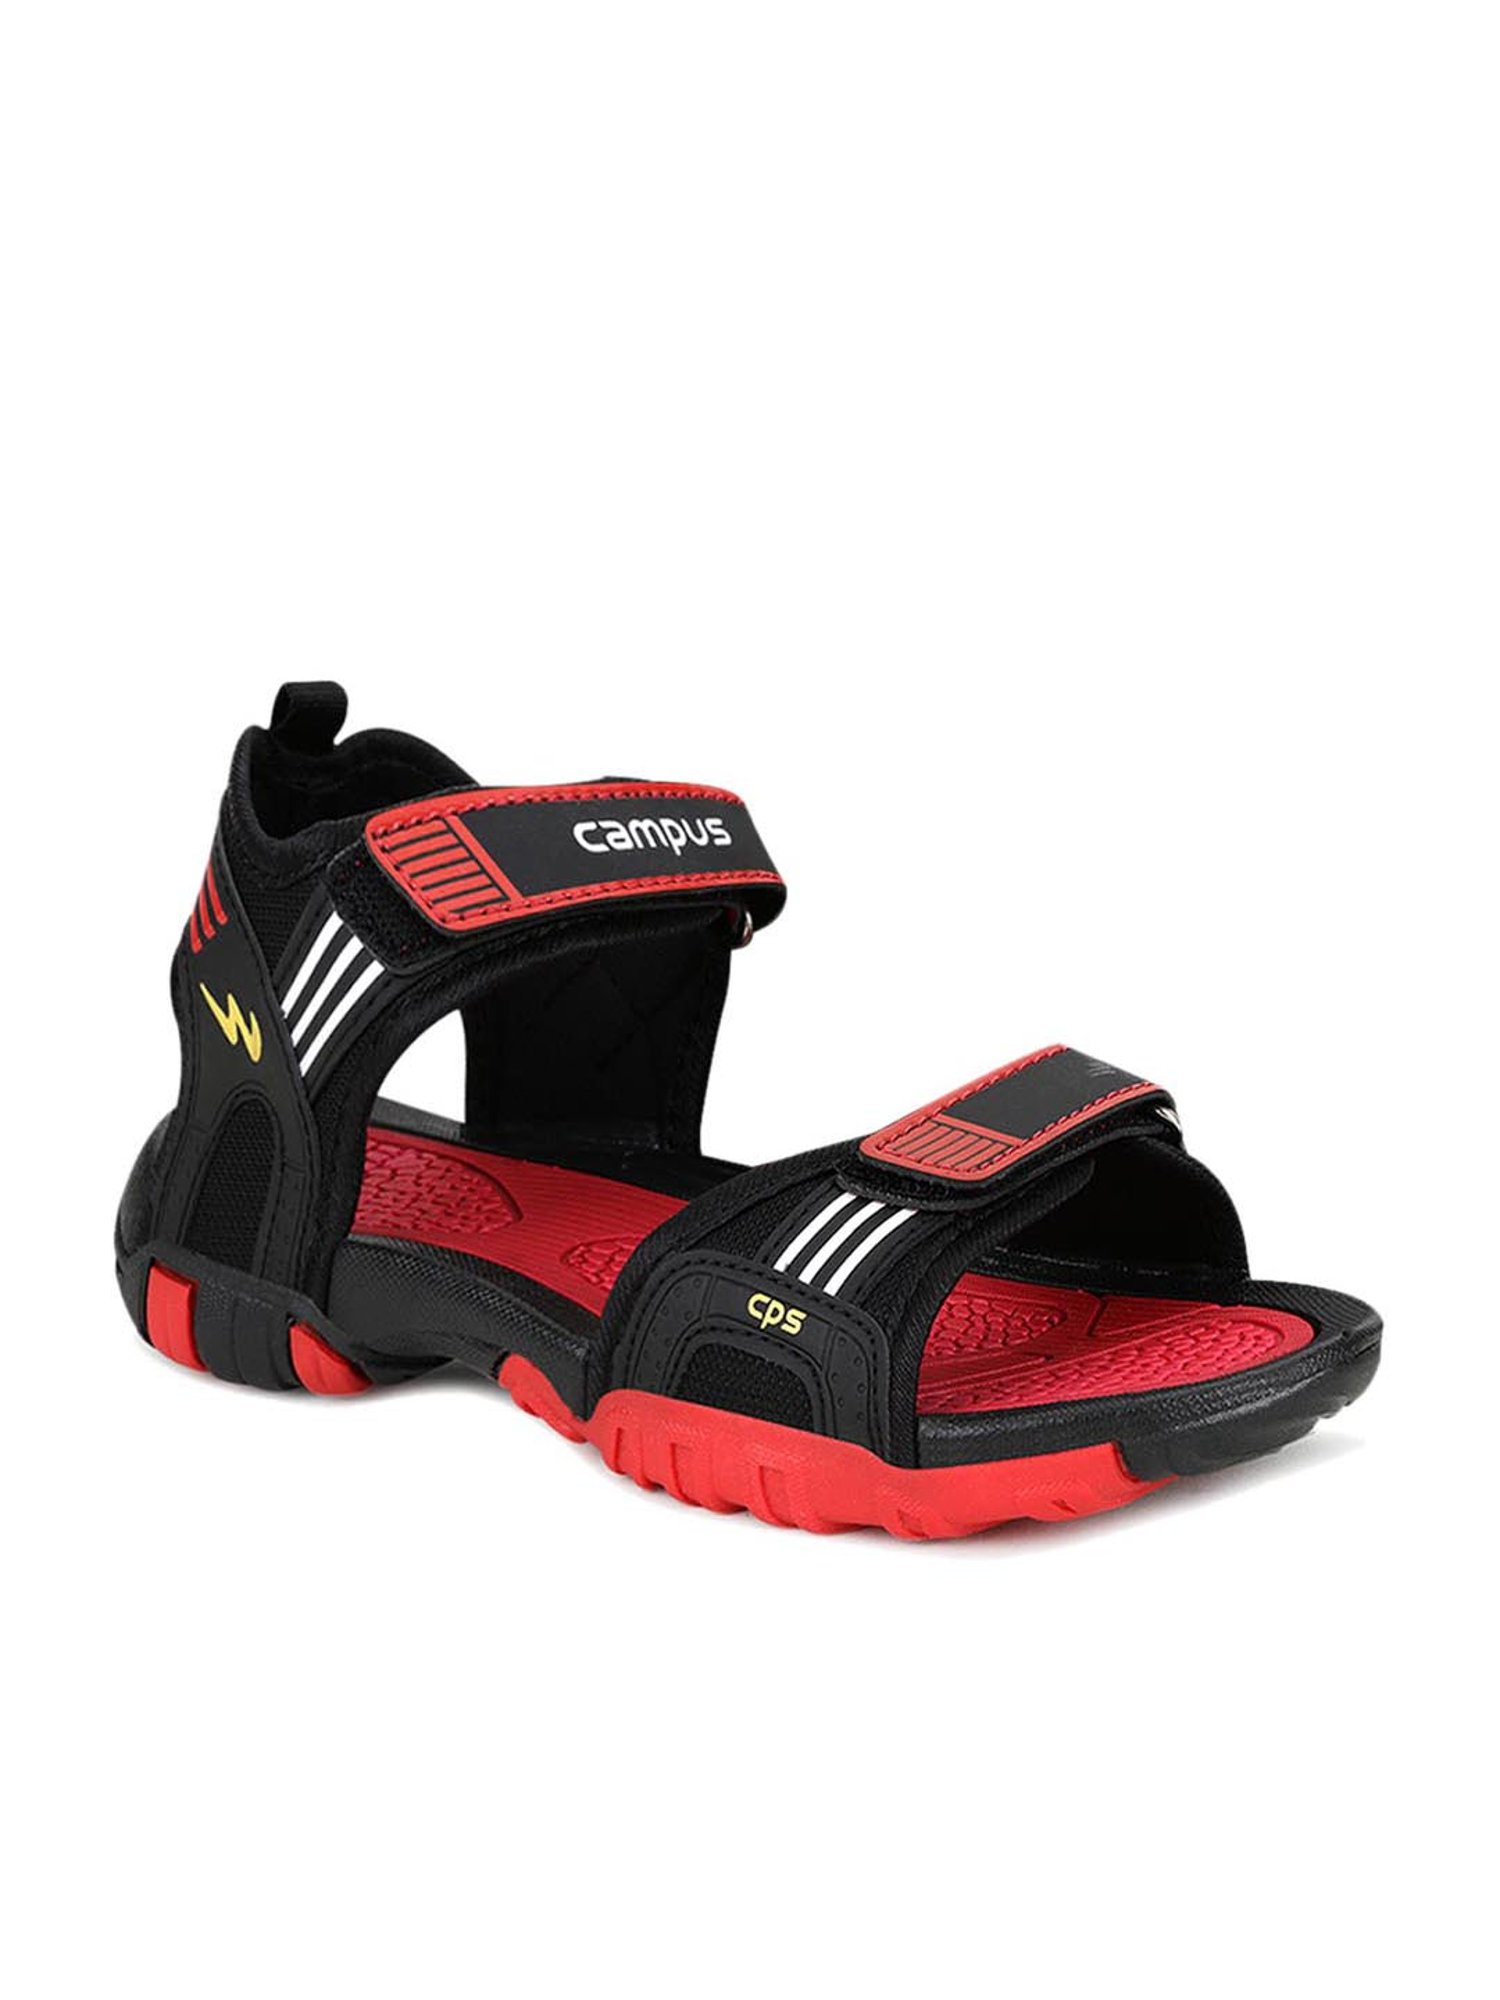 Buy Campus Men Black Sandals - Sandals for Men 9394539 | Myntra